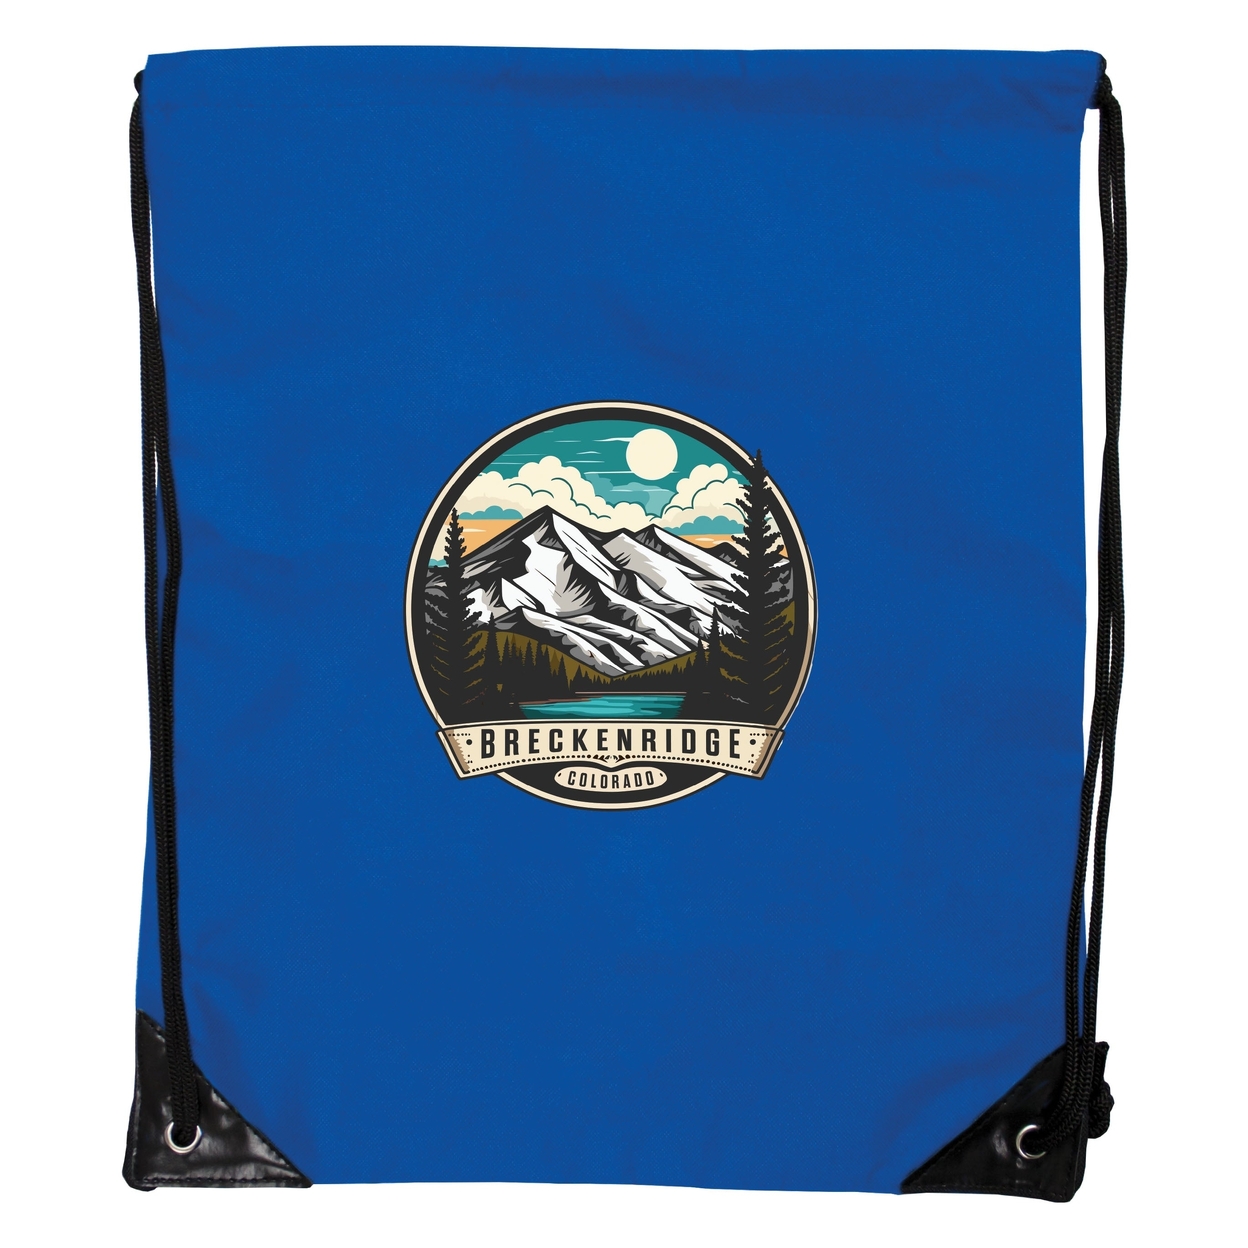 Breckenridge Colorado Design A Souvenir Cinch Bag With Drawstring Backpack Black - Blue